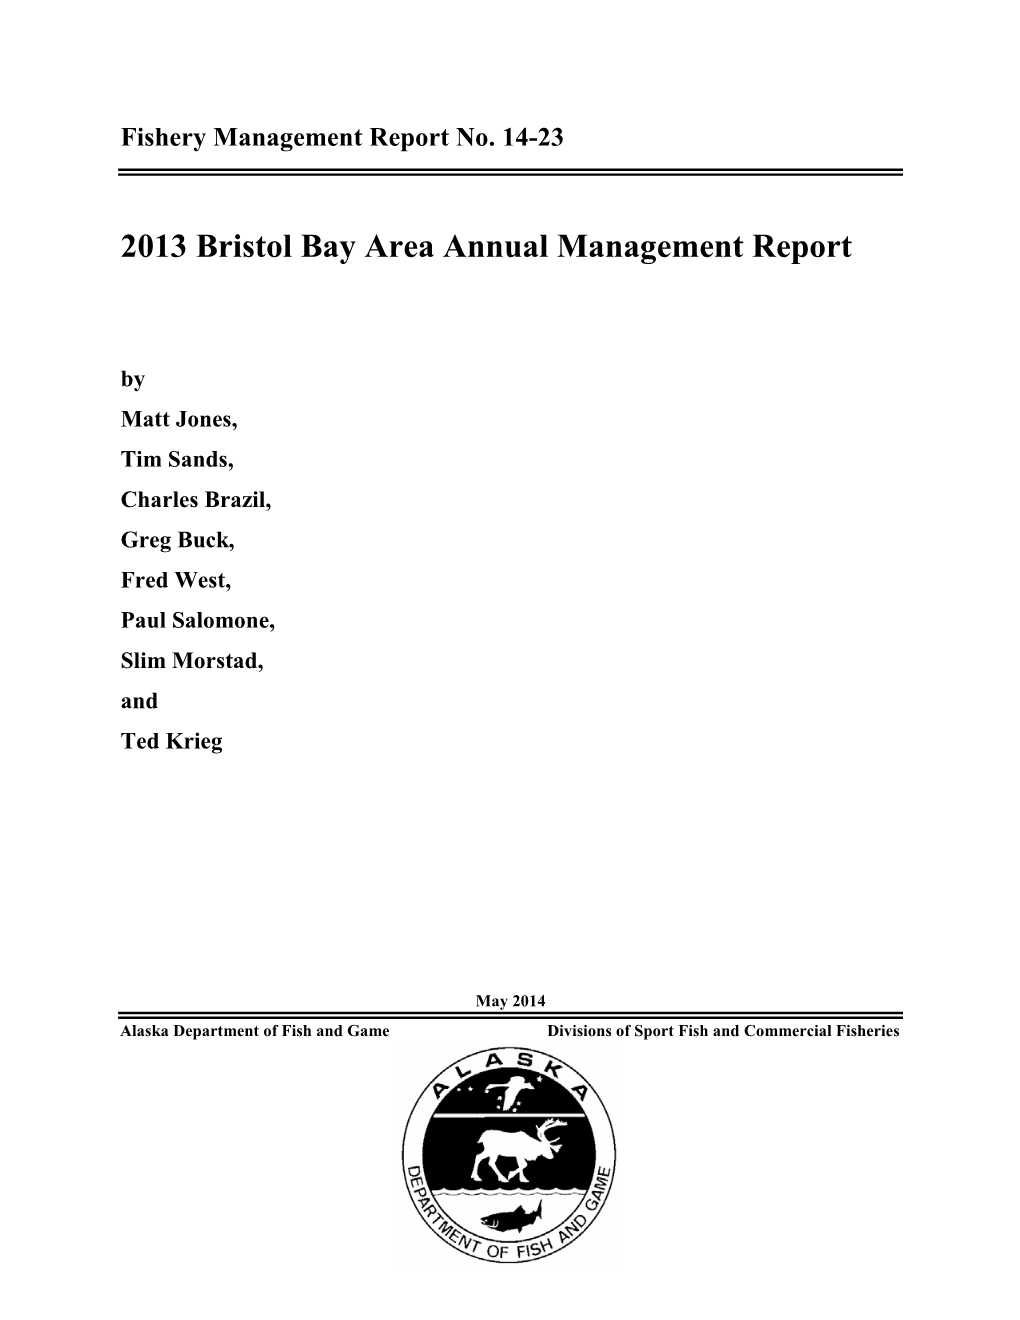 2013 Bristol Bay Area Annual Management Report